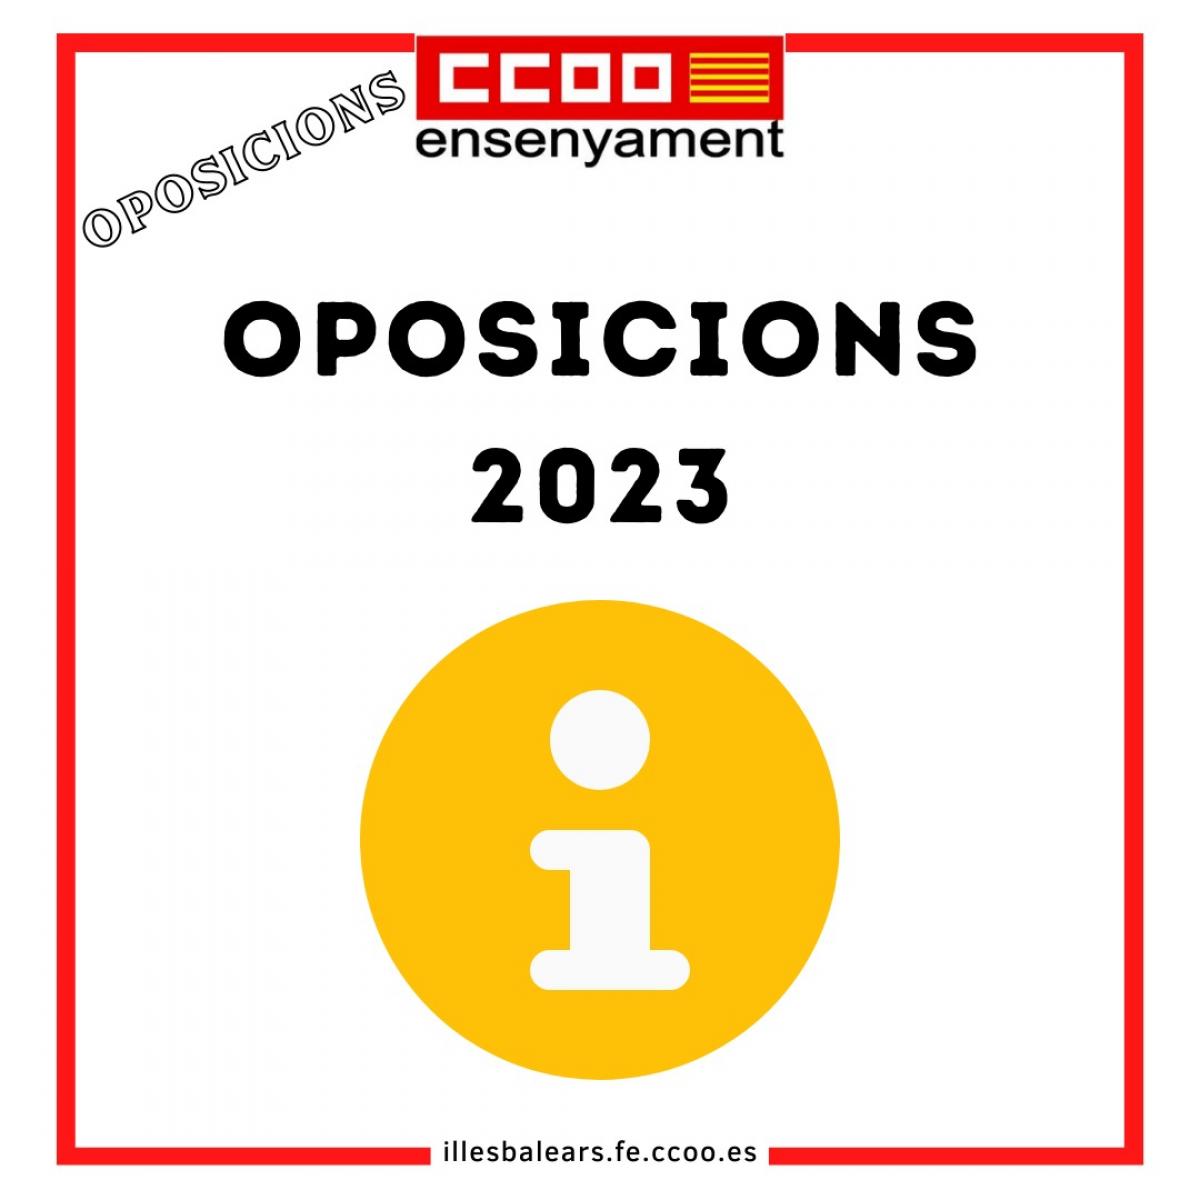 Oposicions 2023